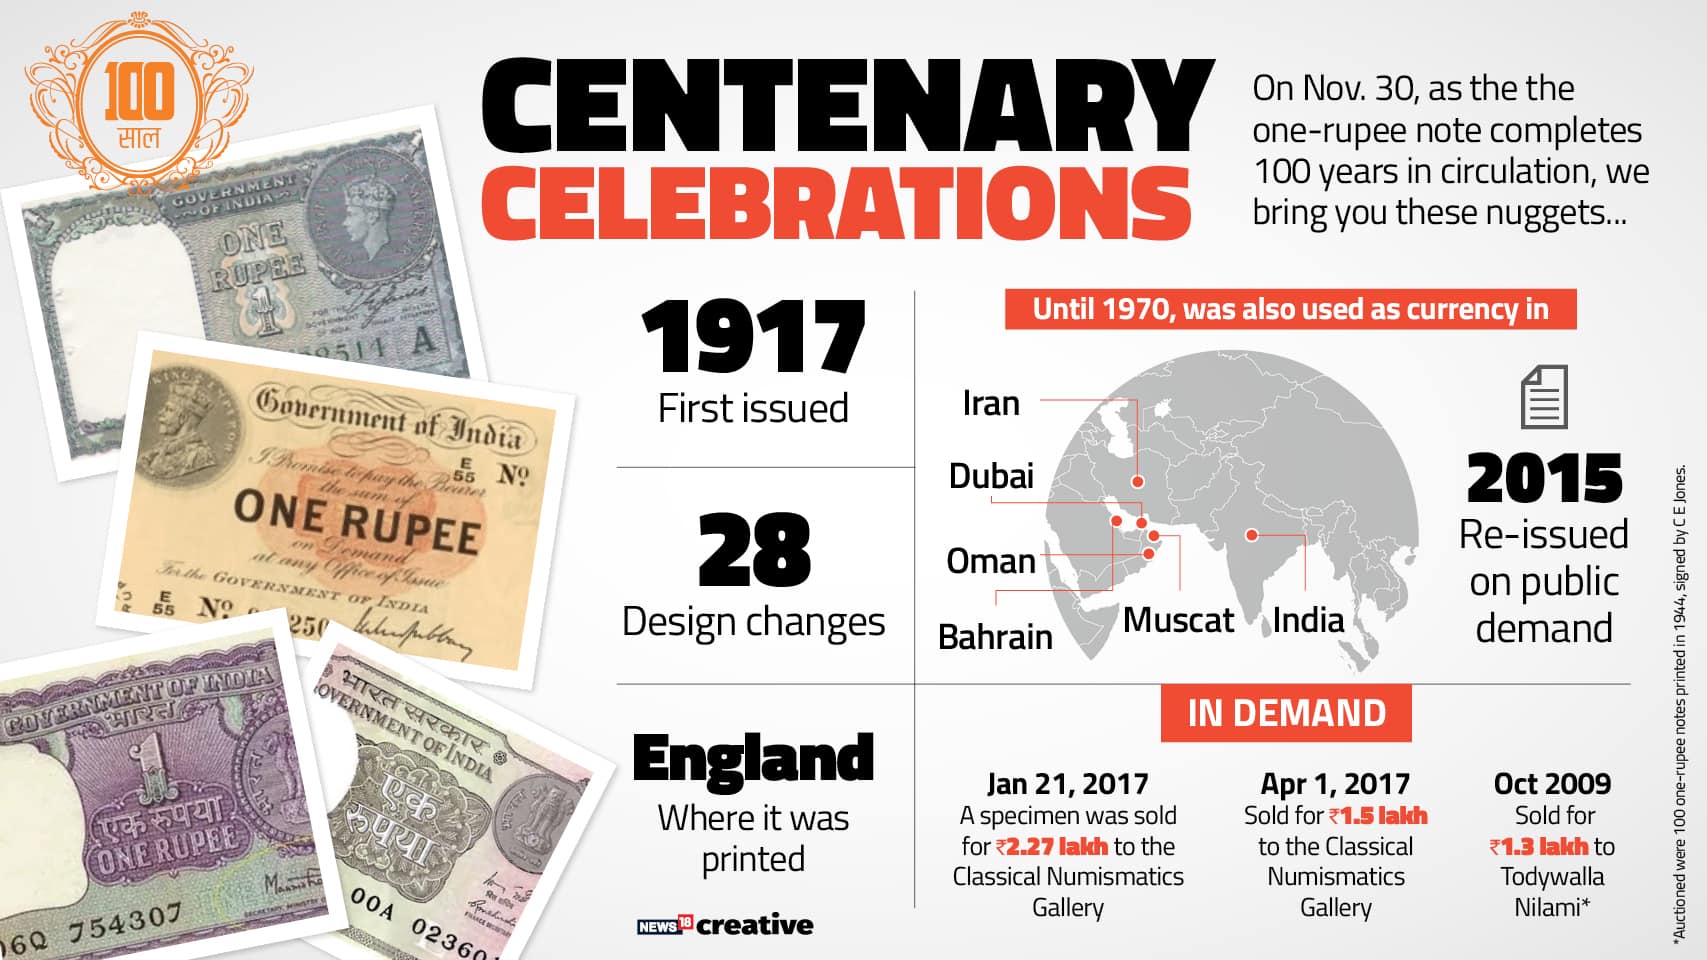 One rupee Note 100 years